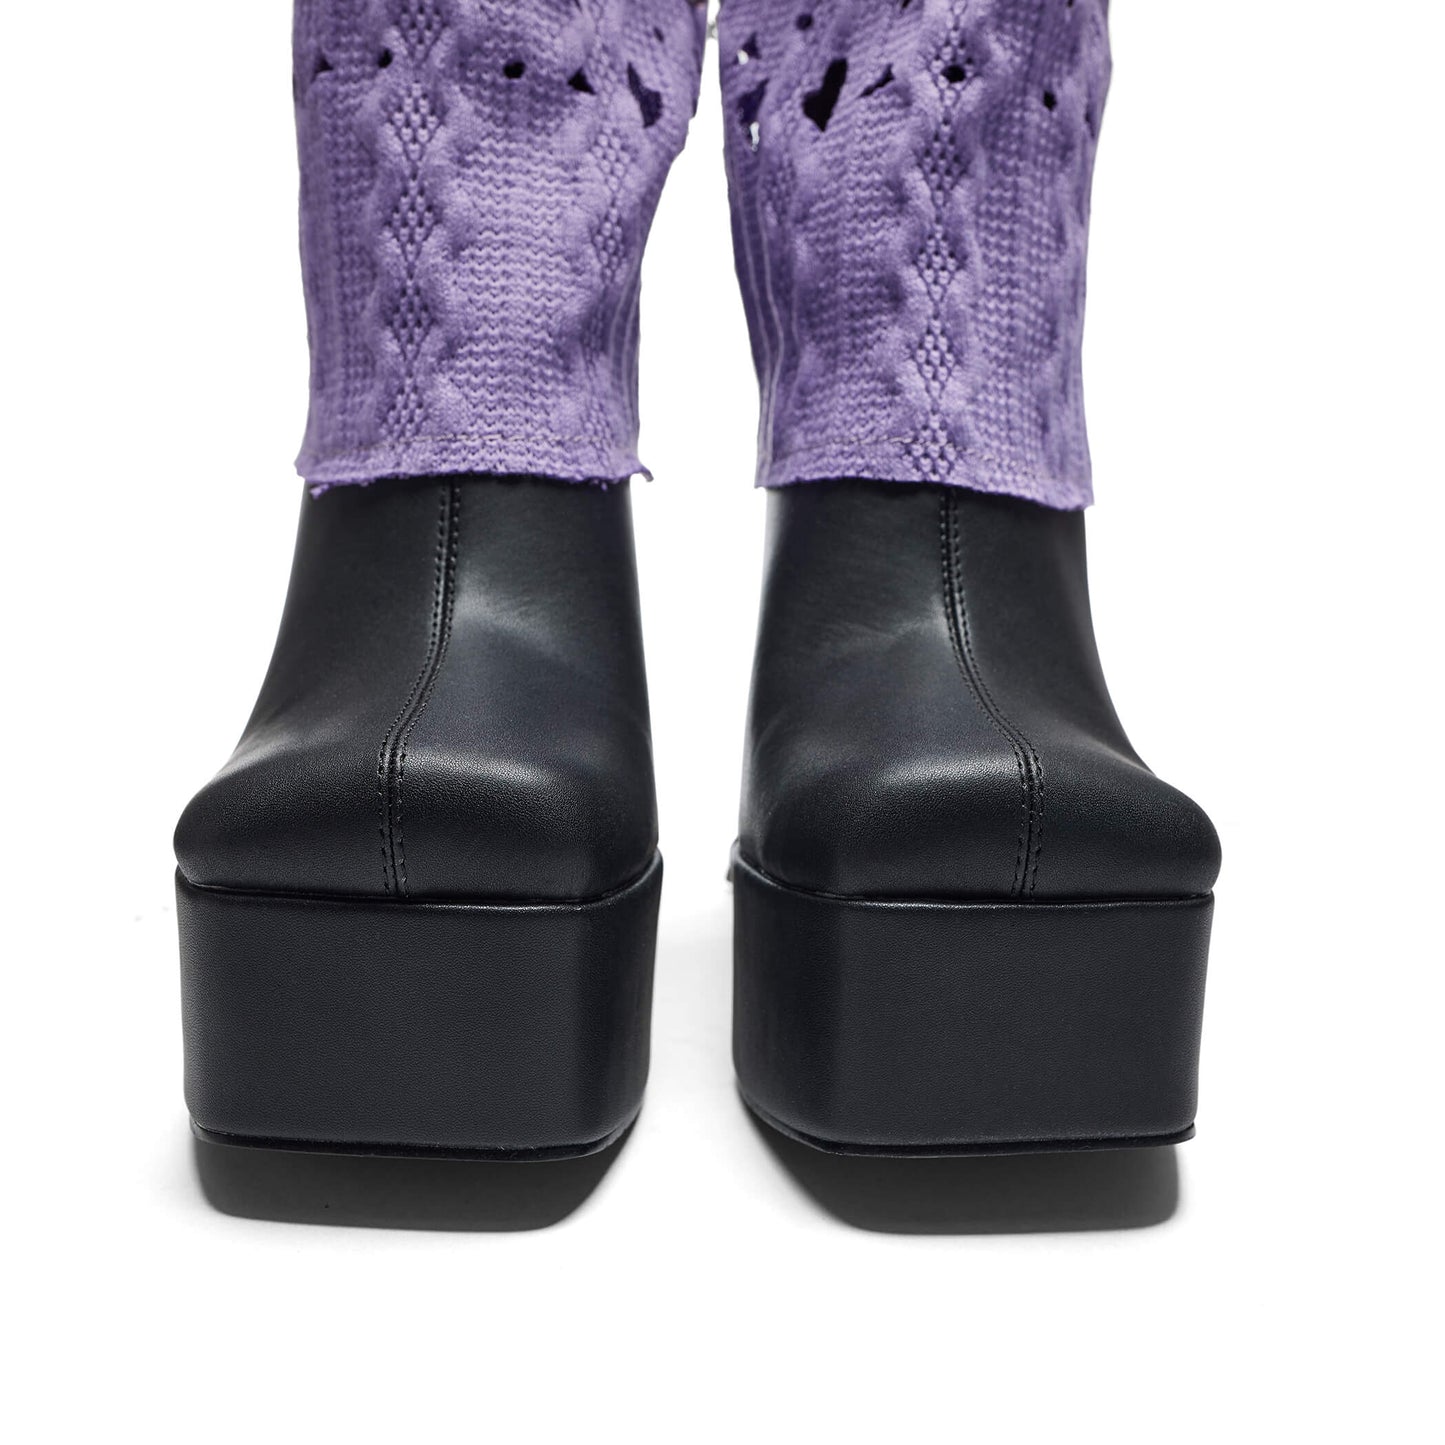 Jam Monster Heeled Long Boots - Purple - Long Boots - KOI Footwear - Purple - Top View